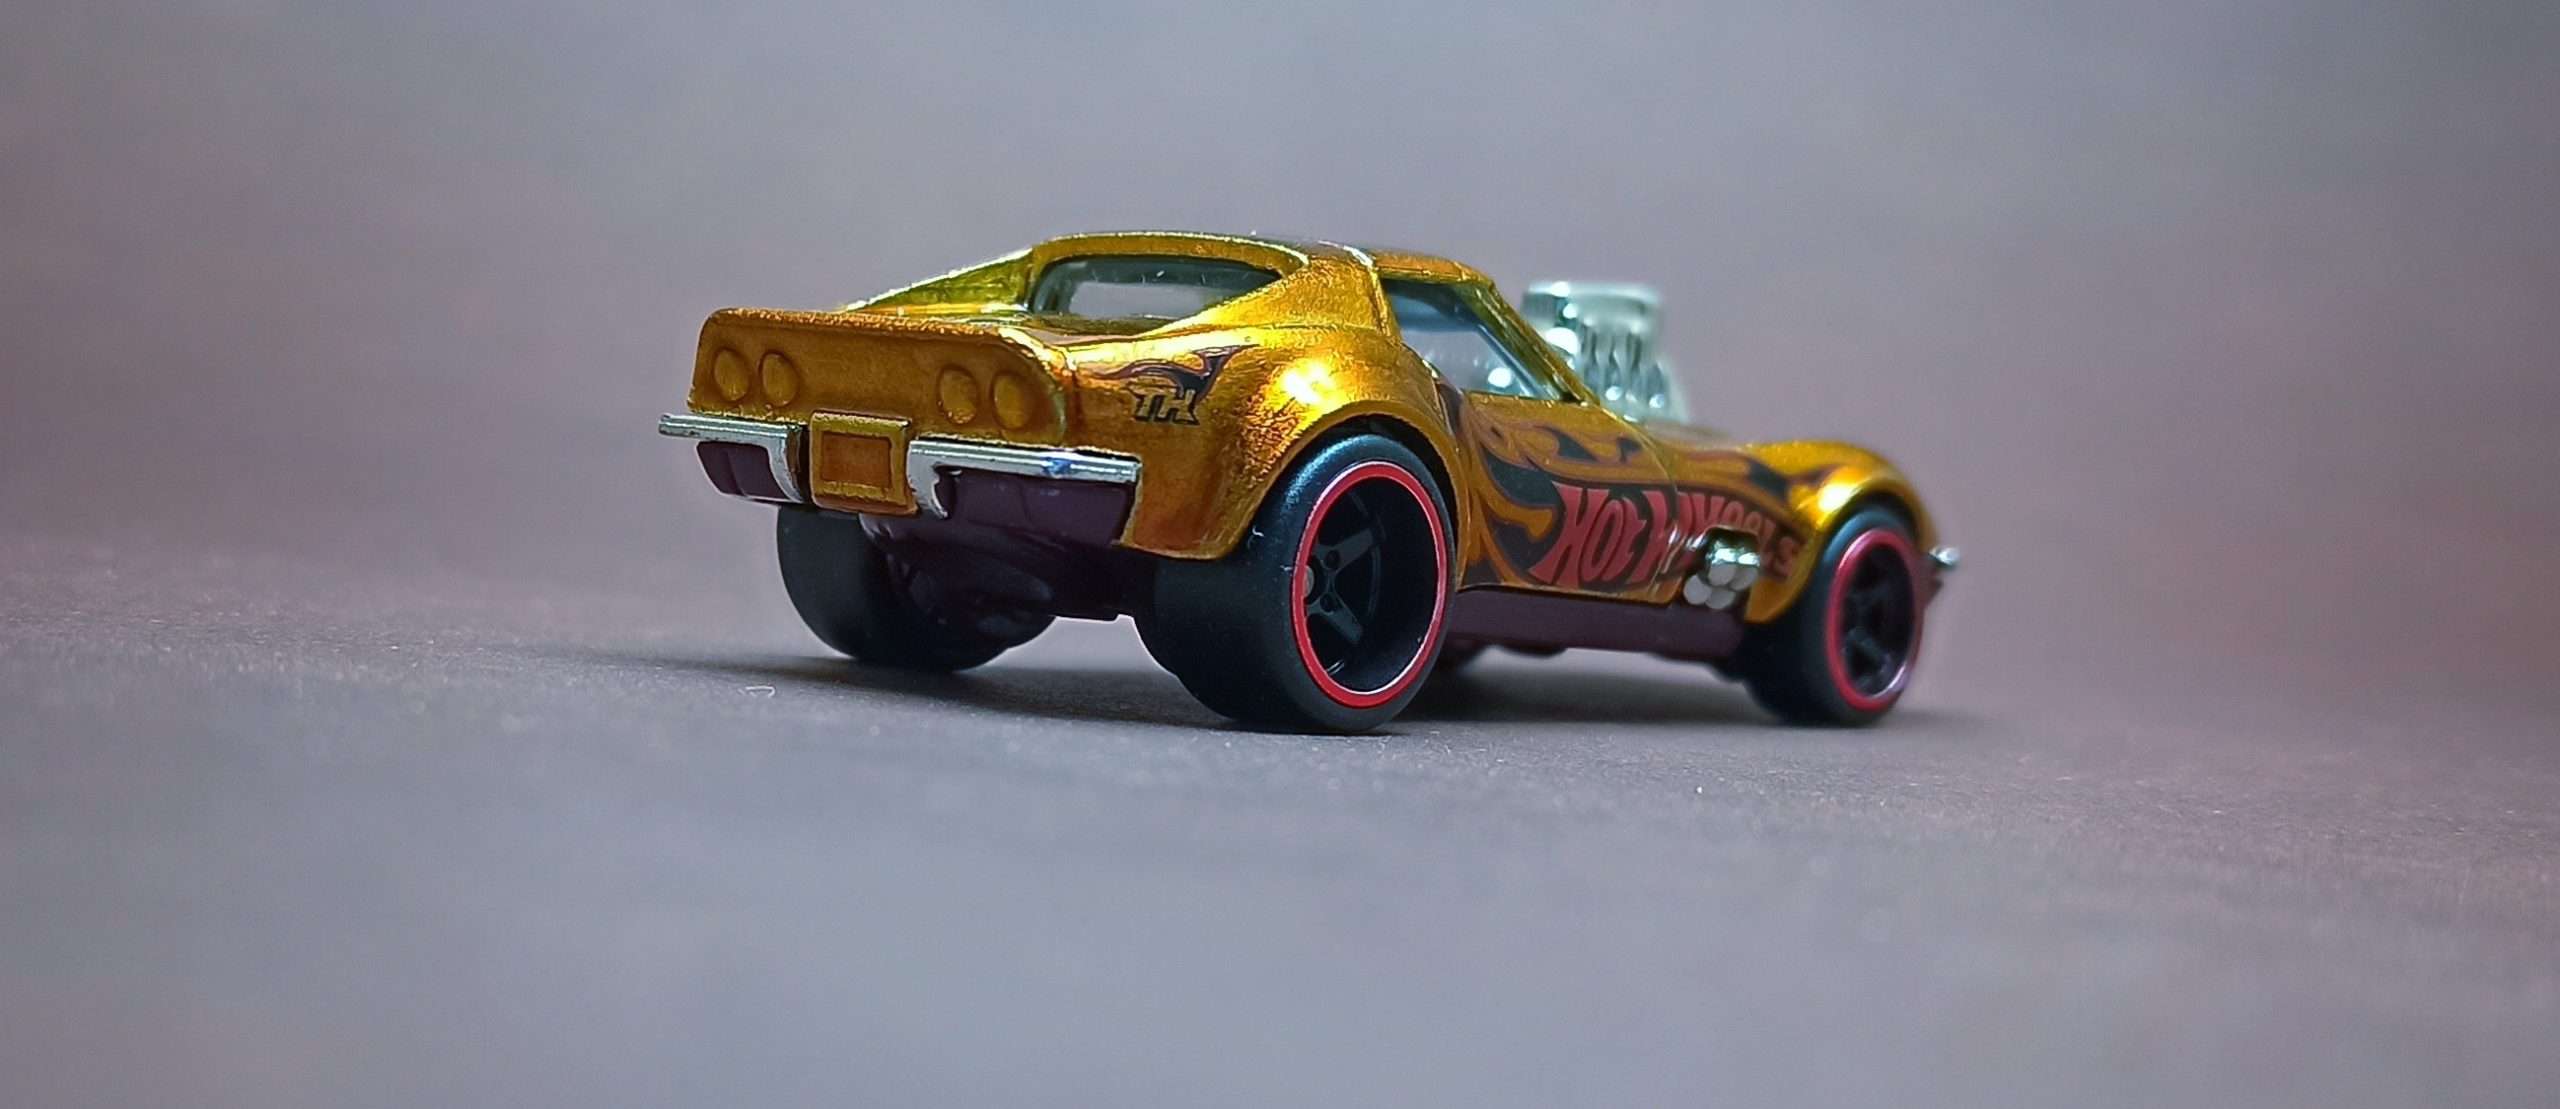 Hot Wheels '68 Corvette - Gas Monkey Garage (HKL10) 2023 (139/250) HW Dream Garage (5/5) spectraflame gold Super Treasure Hunt (STH)